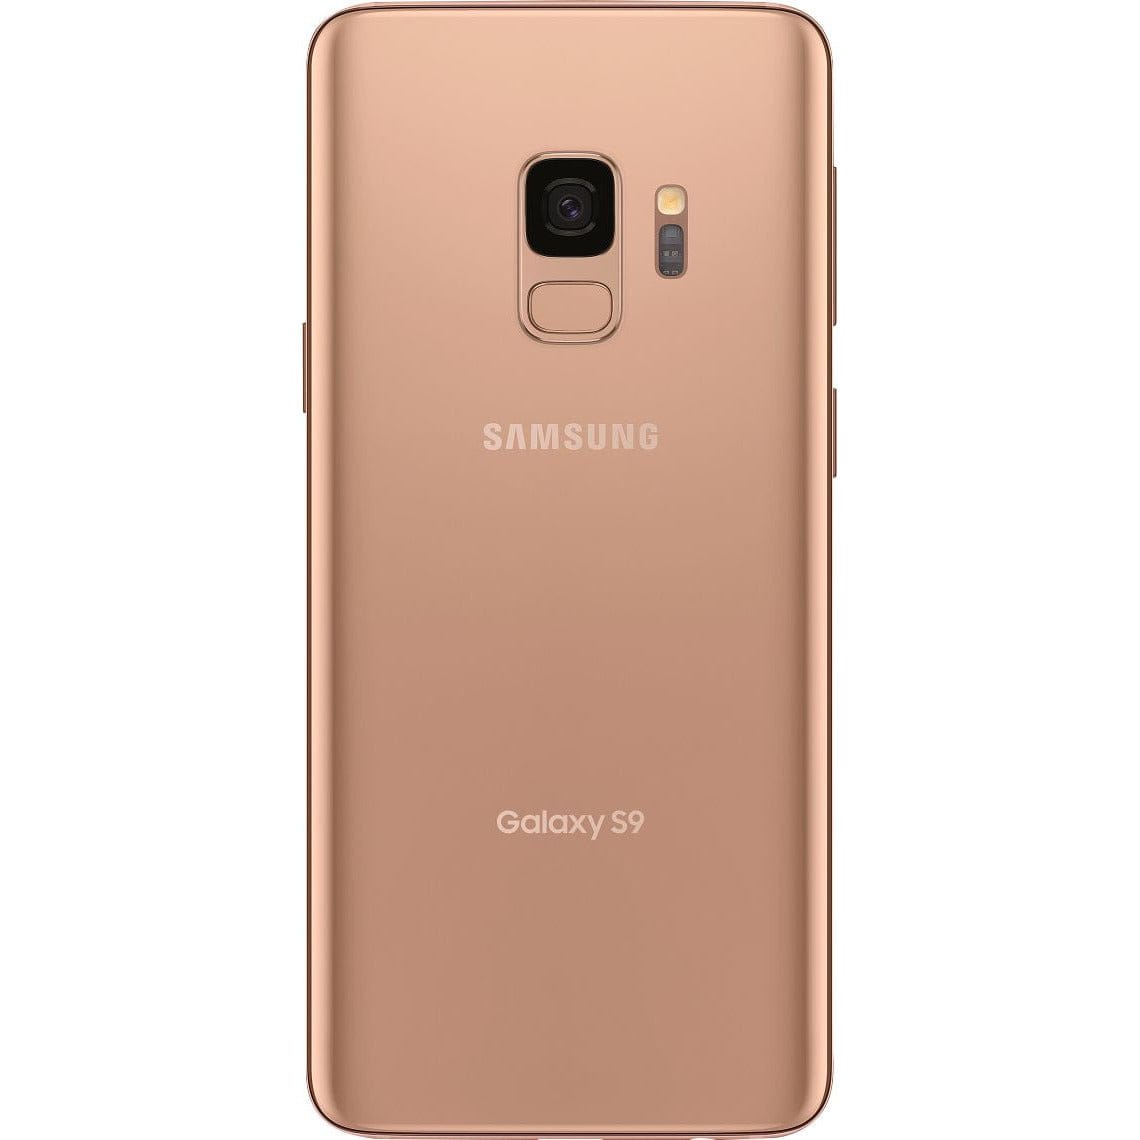 Samsung Galaxy S9 - 128 GB - Sunrise Gold - Unlocked - CDMA-GSM